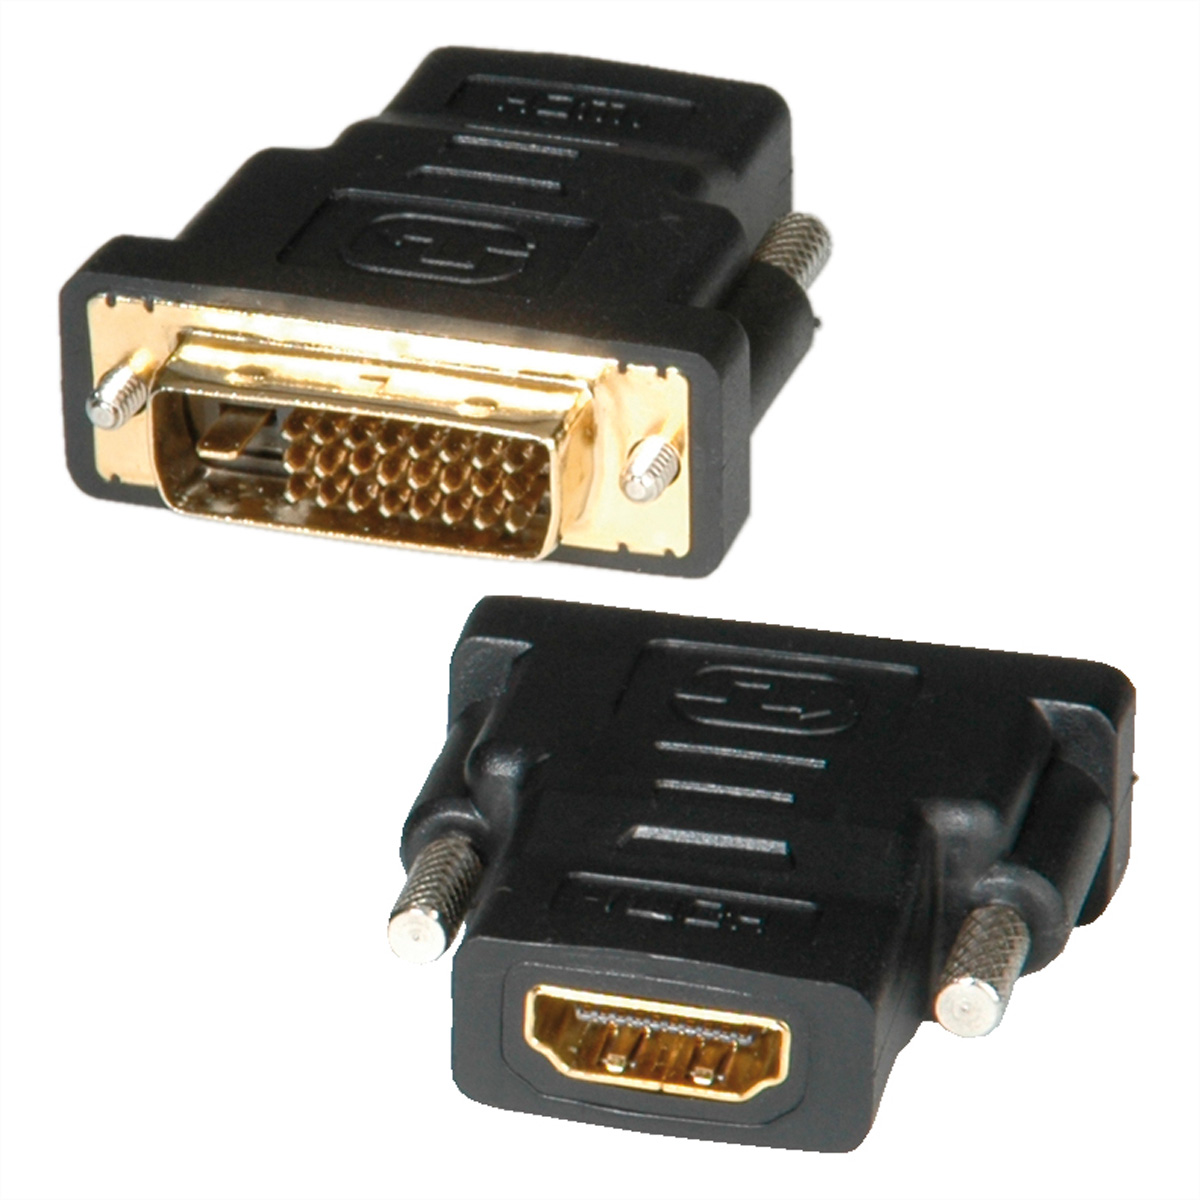 ROLINE HDMI-DVI Adapter BU HDMI-DVI ST HDMI / Adapter, DVI-D